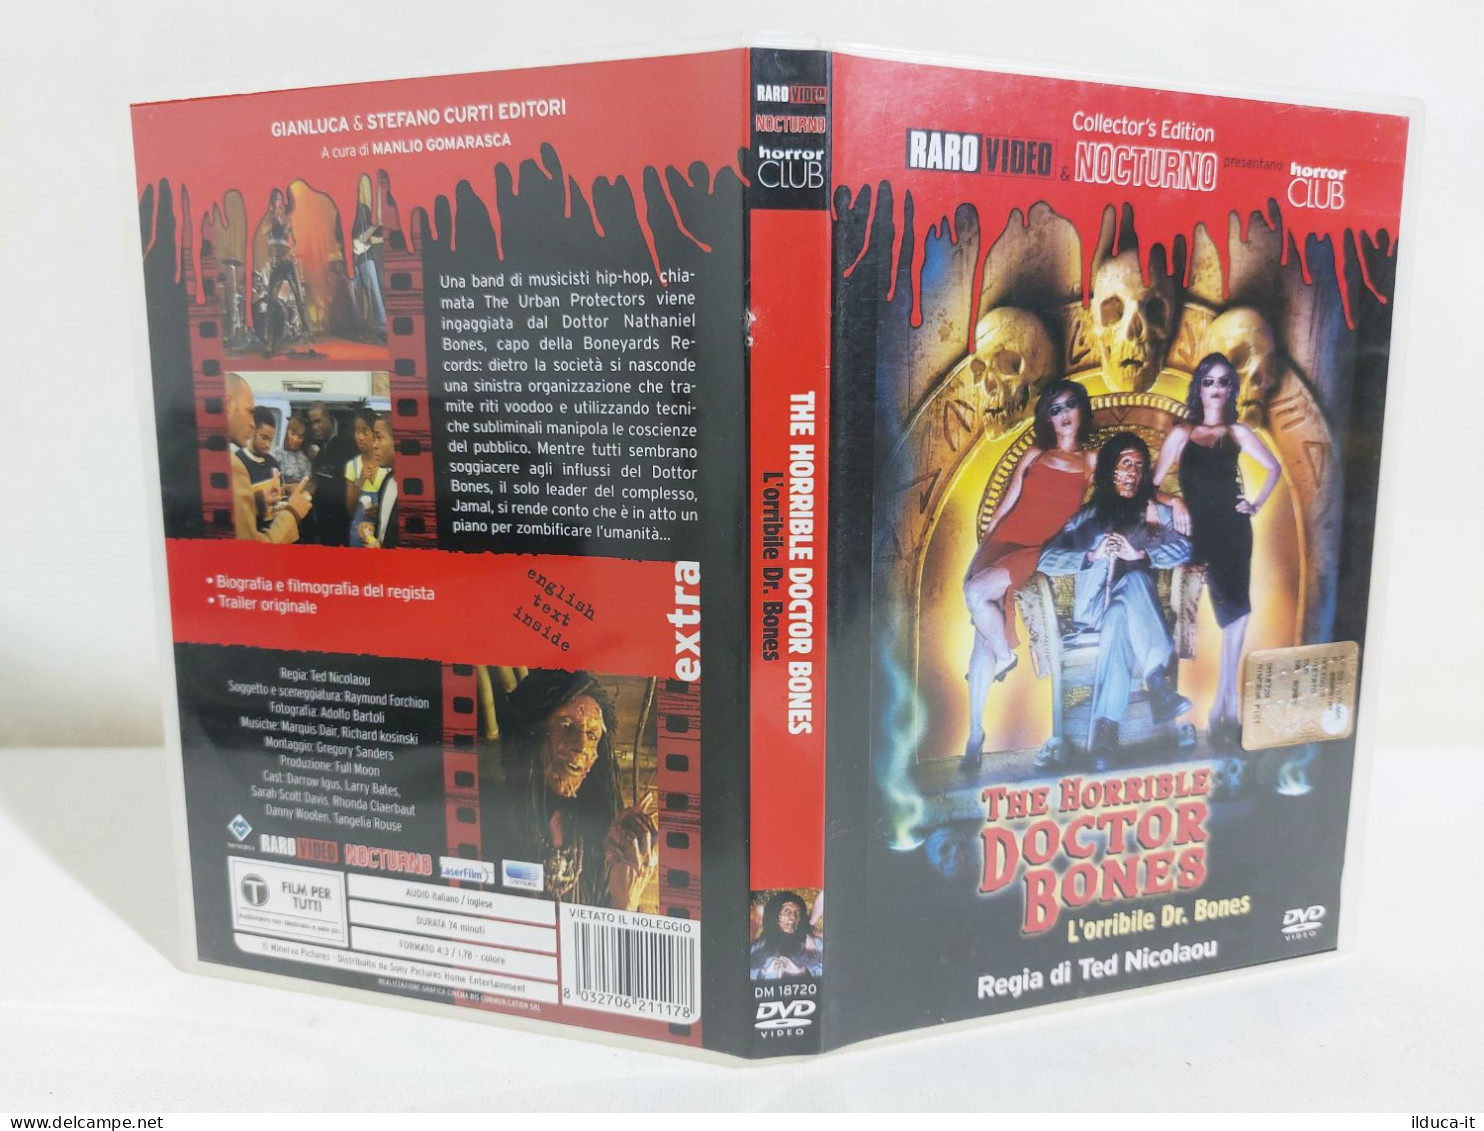 39580 DVD - The Horrible Doctor Bones - Regia Ted Nicolau - Darrow Igus - Horreur